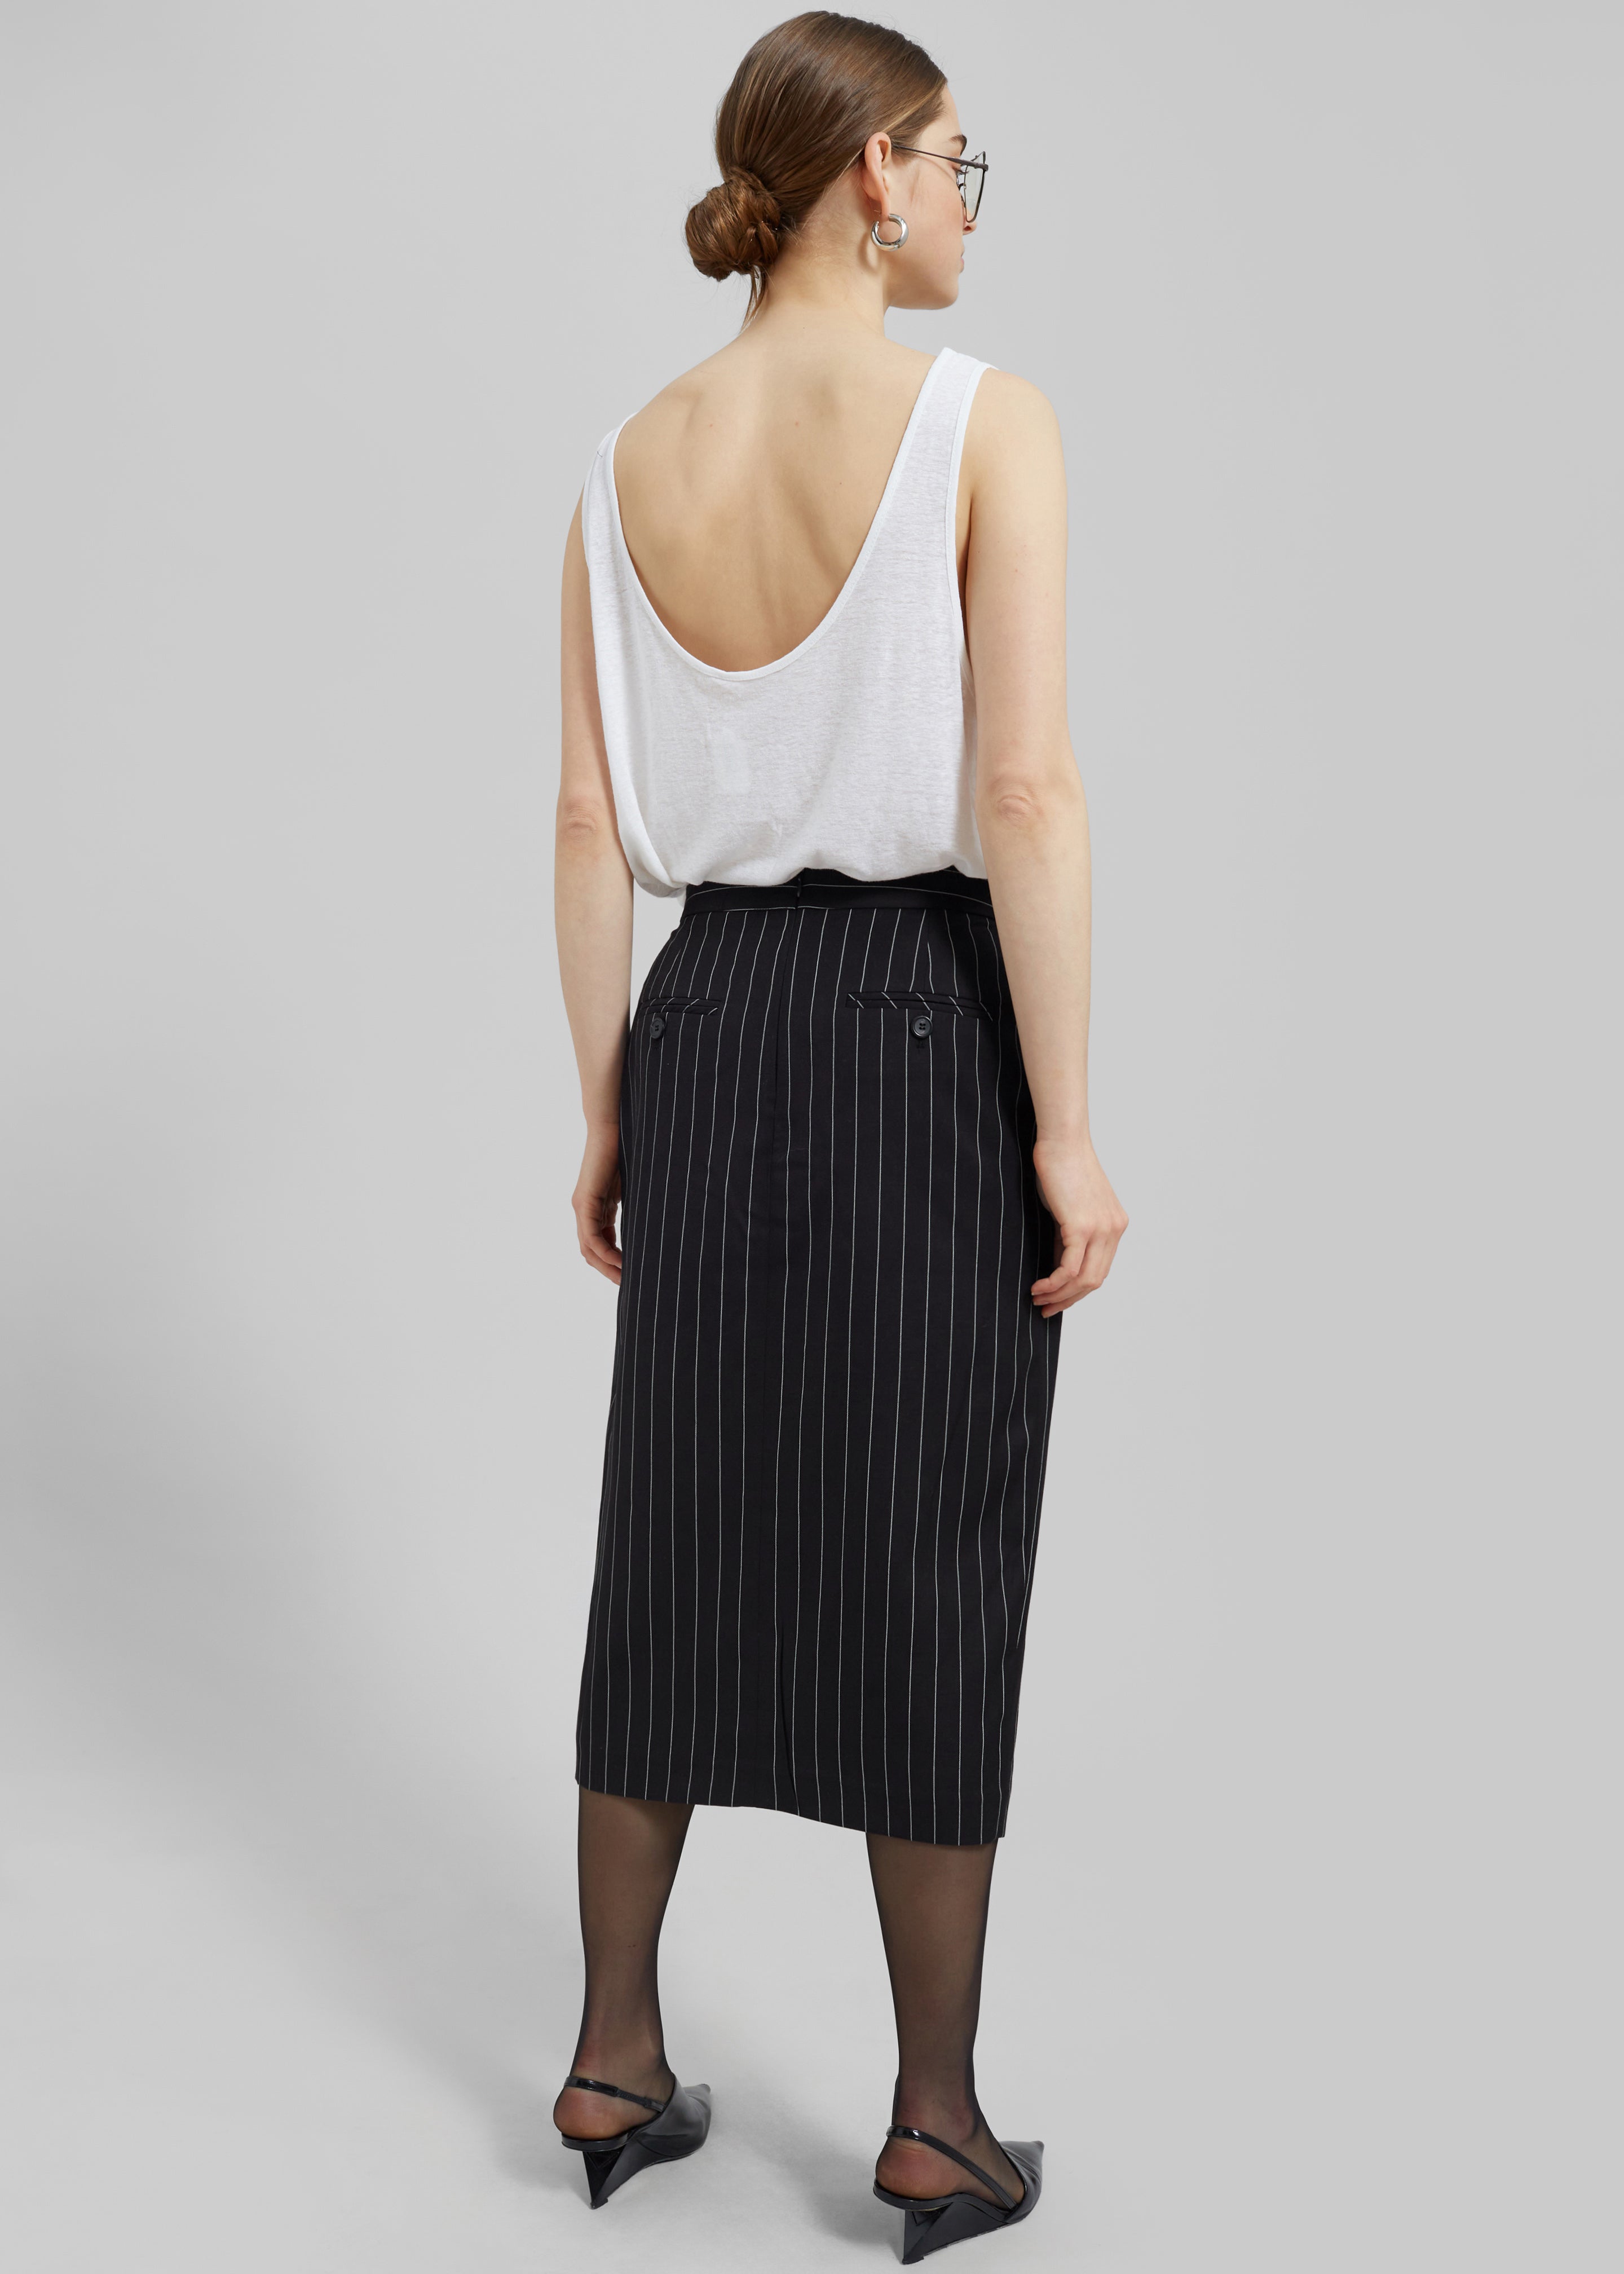 Holland Midi Slit Skirt - Black/White Pinstripe - 13